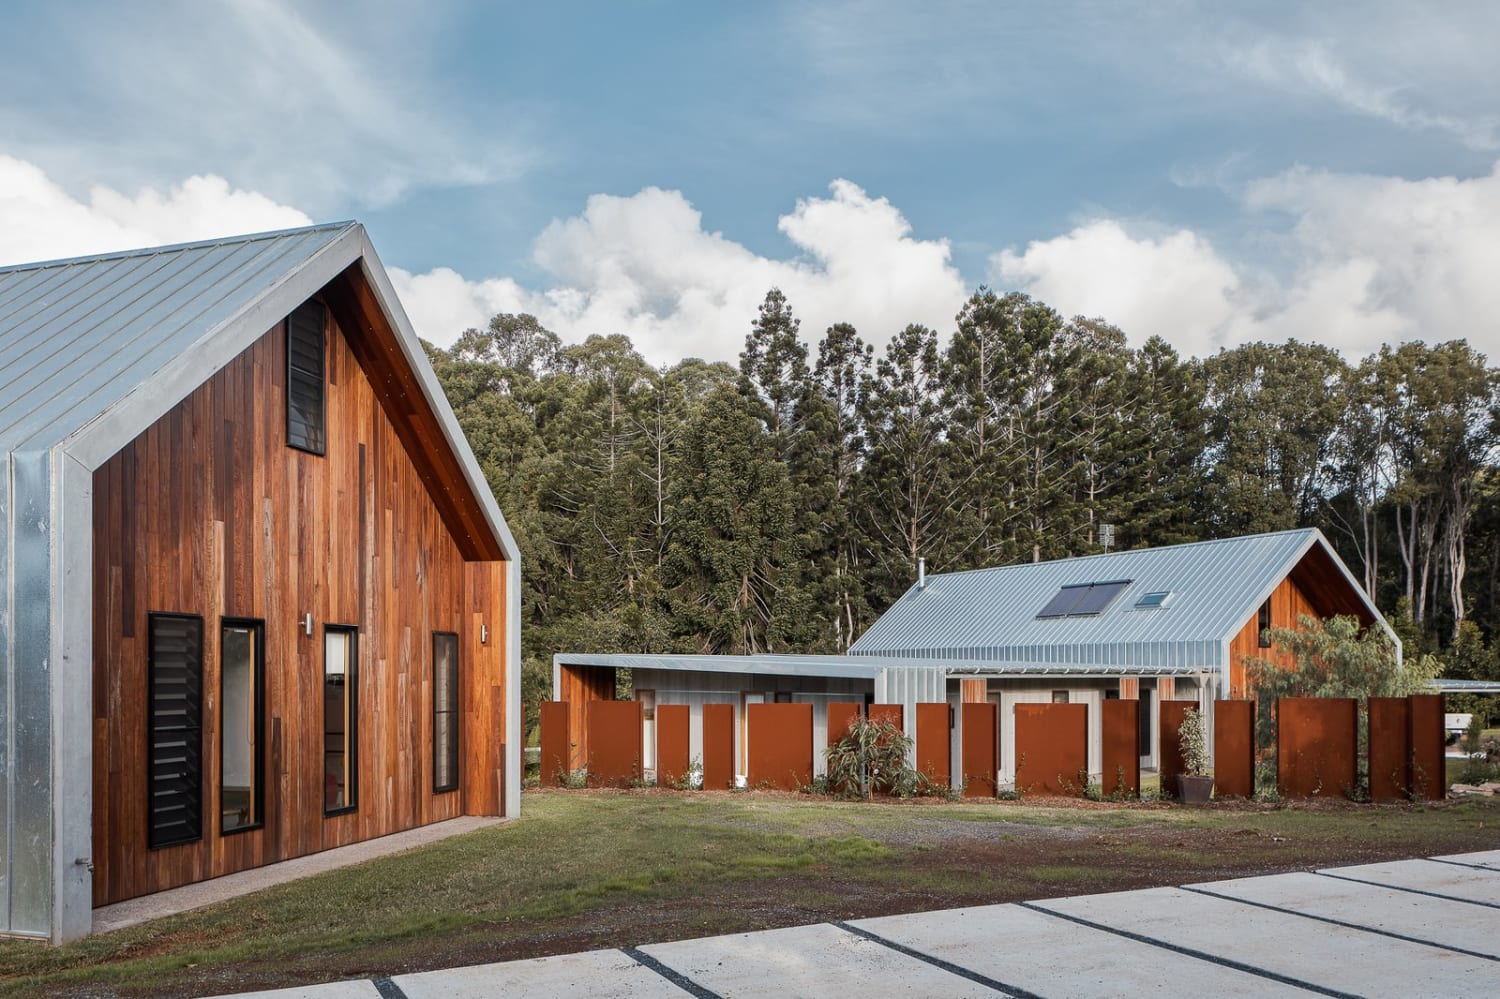 Two Barn-Like Volumes Make Up This Low-Maintenance Australian Home